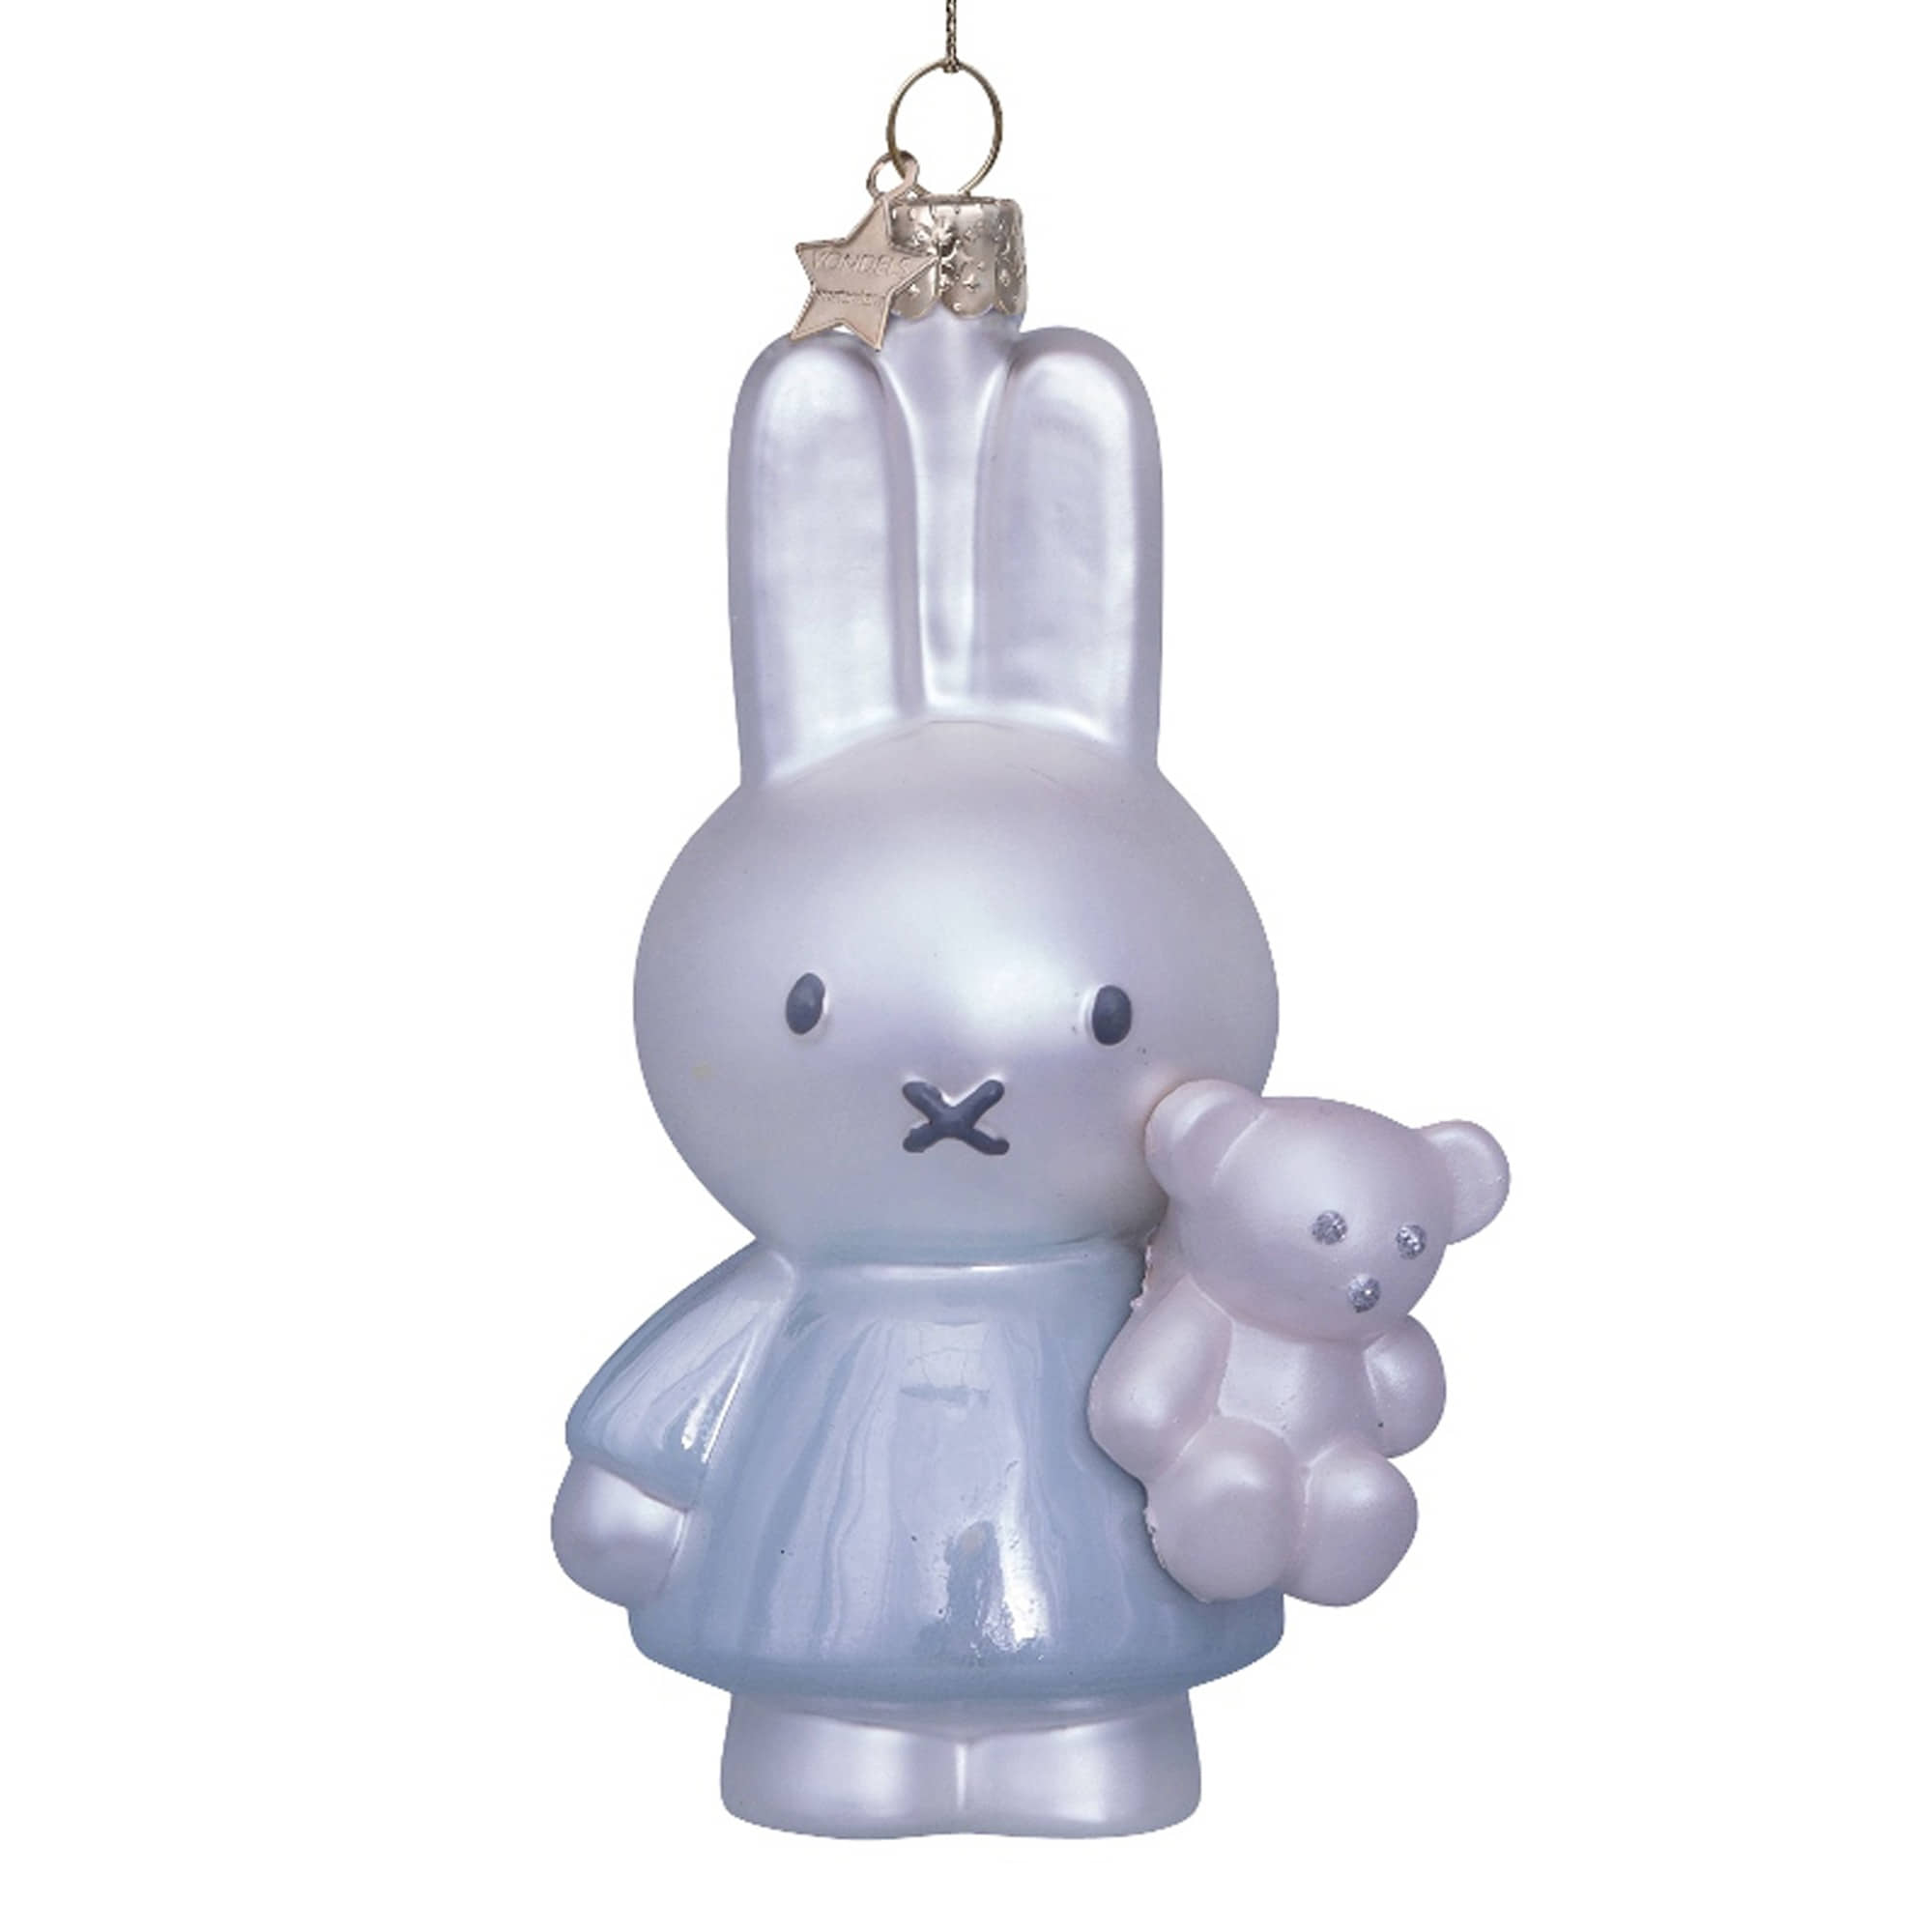 VONDELS Ornament Glass Nijntje/Miffy Baby Blue with Bear